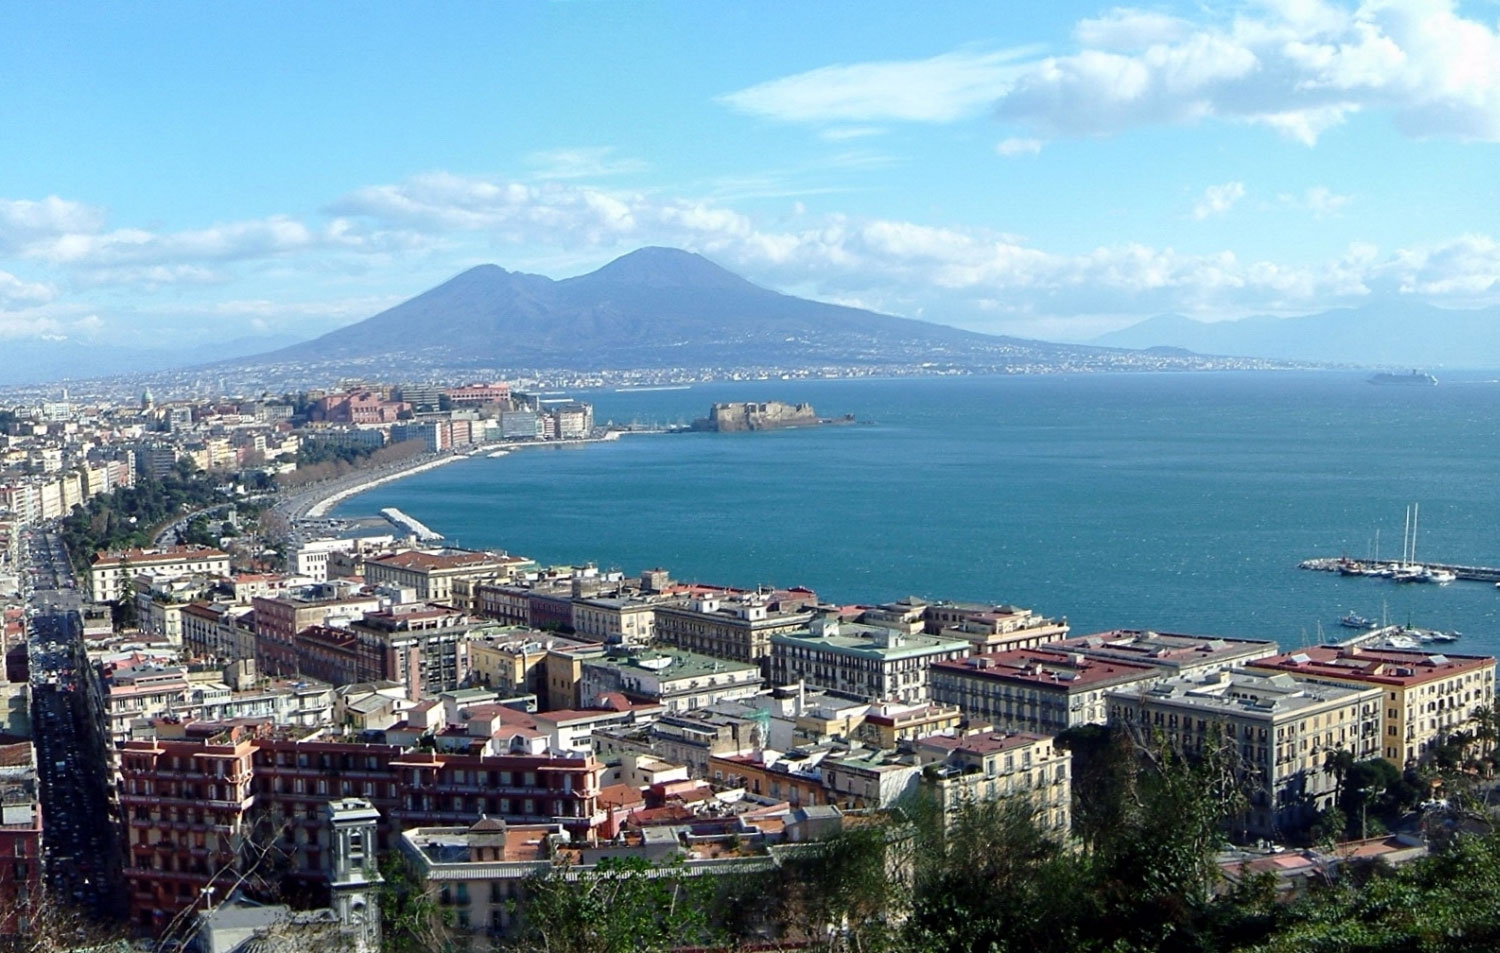 Managing Naples' Water Supply 1500-1750